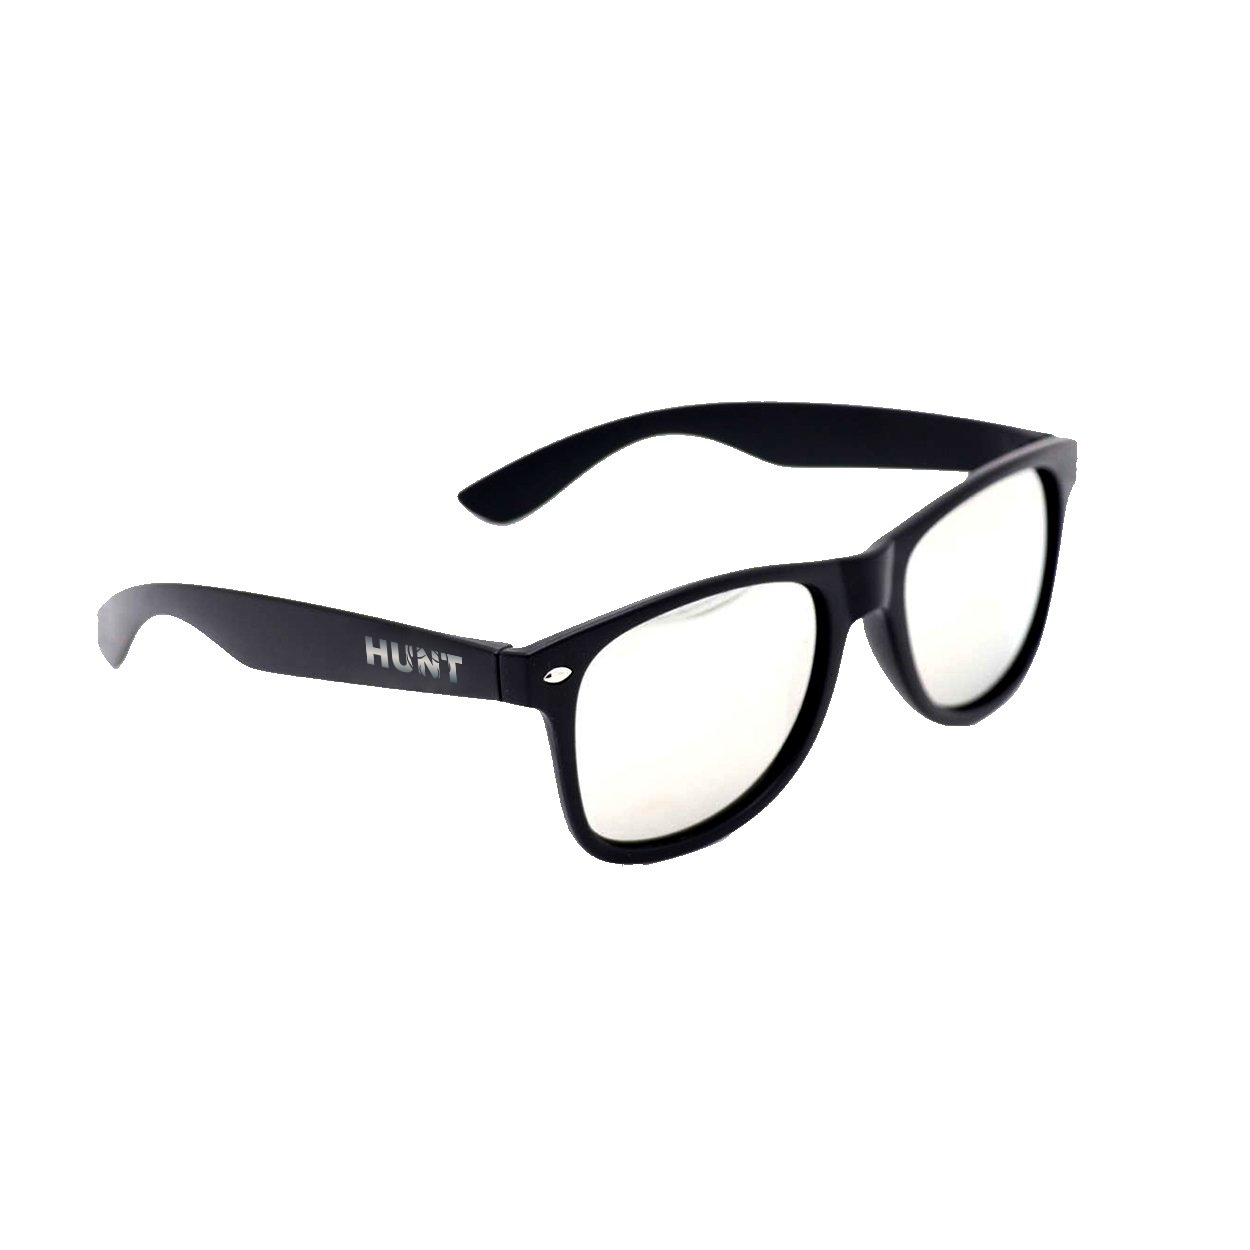 Hunt Rack Logo Classic Sunglasses Black/Chrome (Chrome Logo)